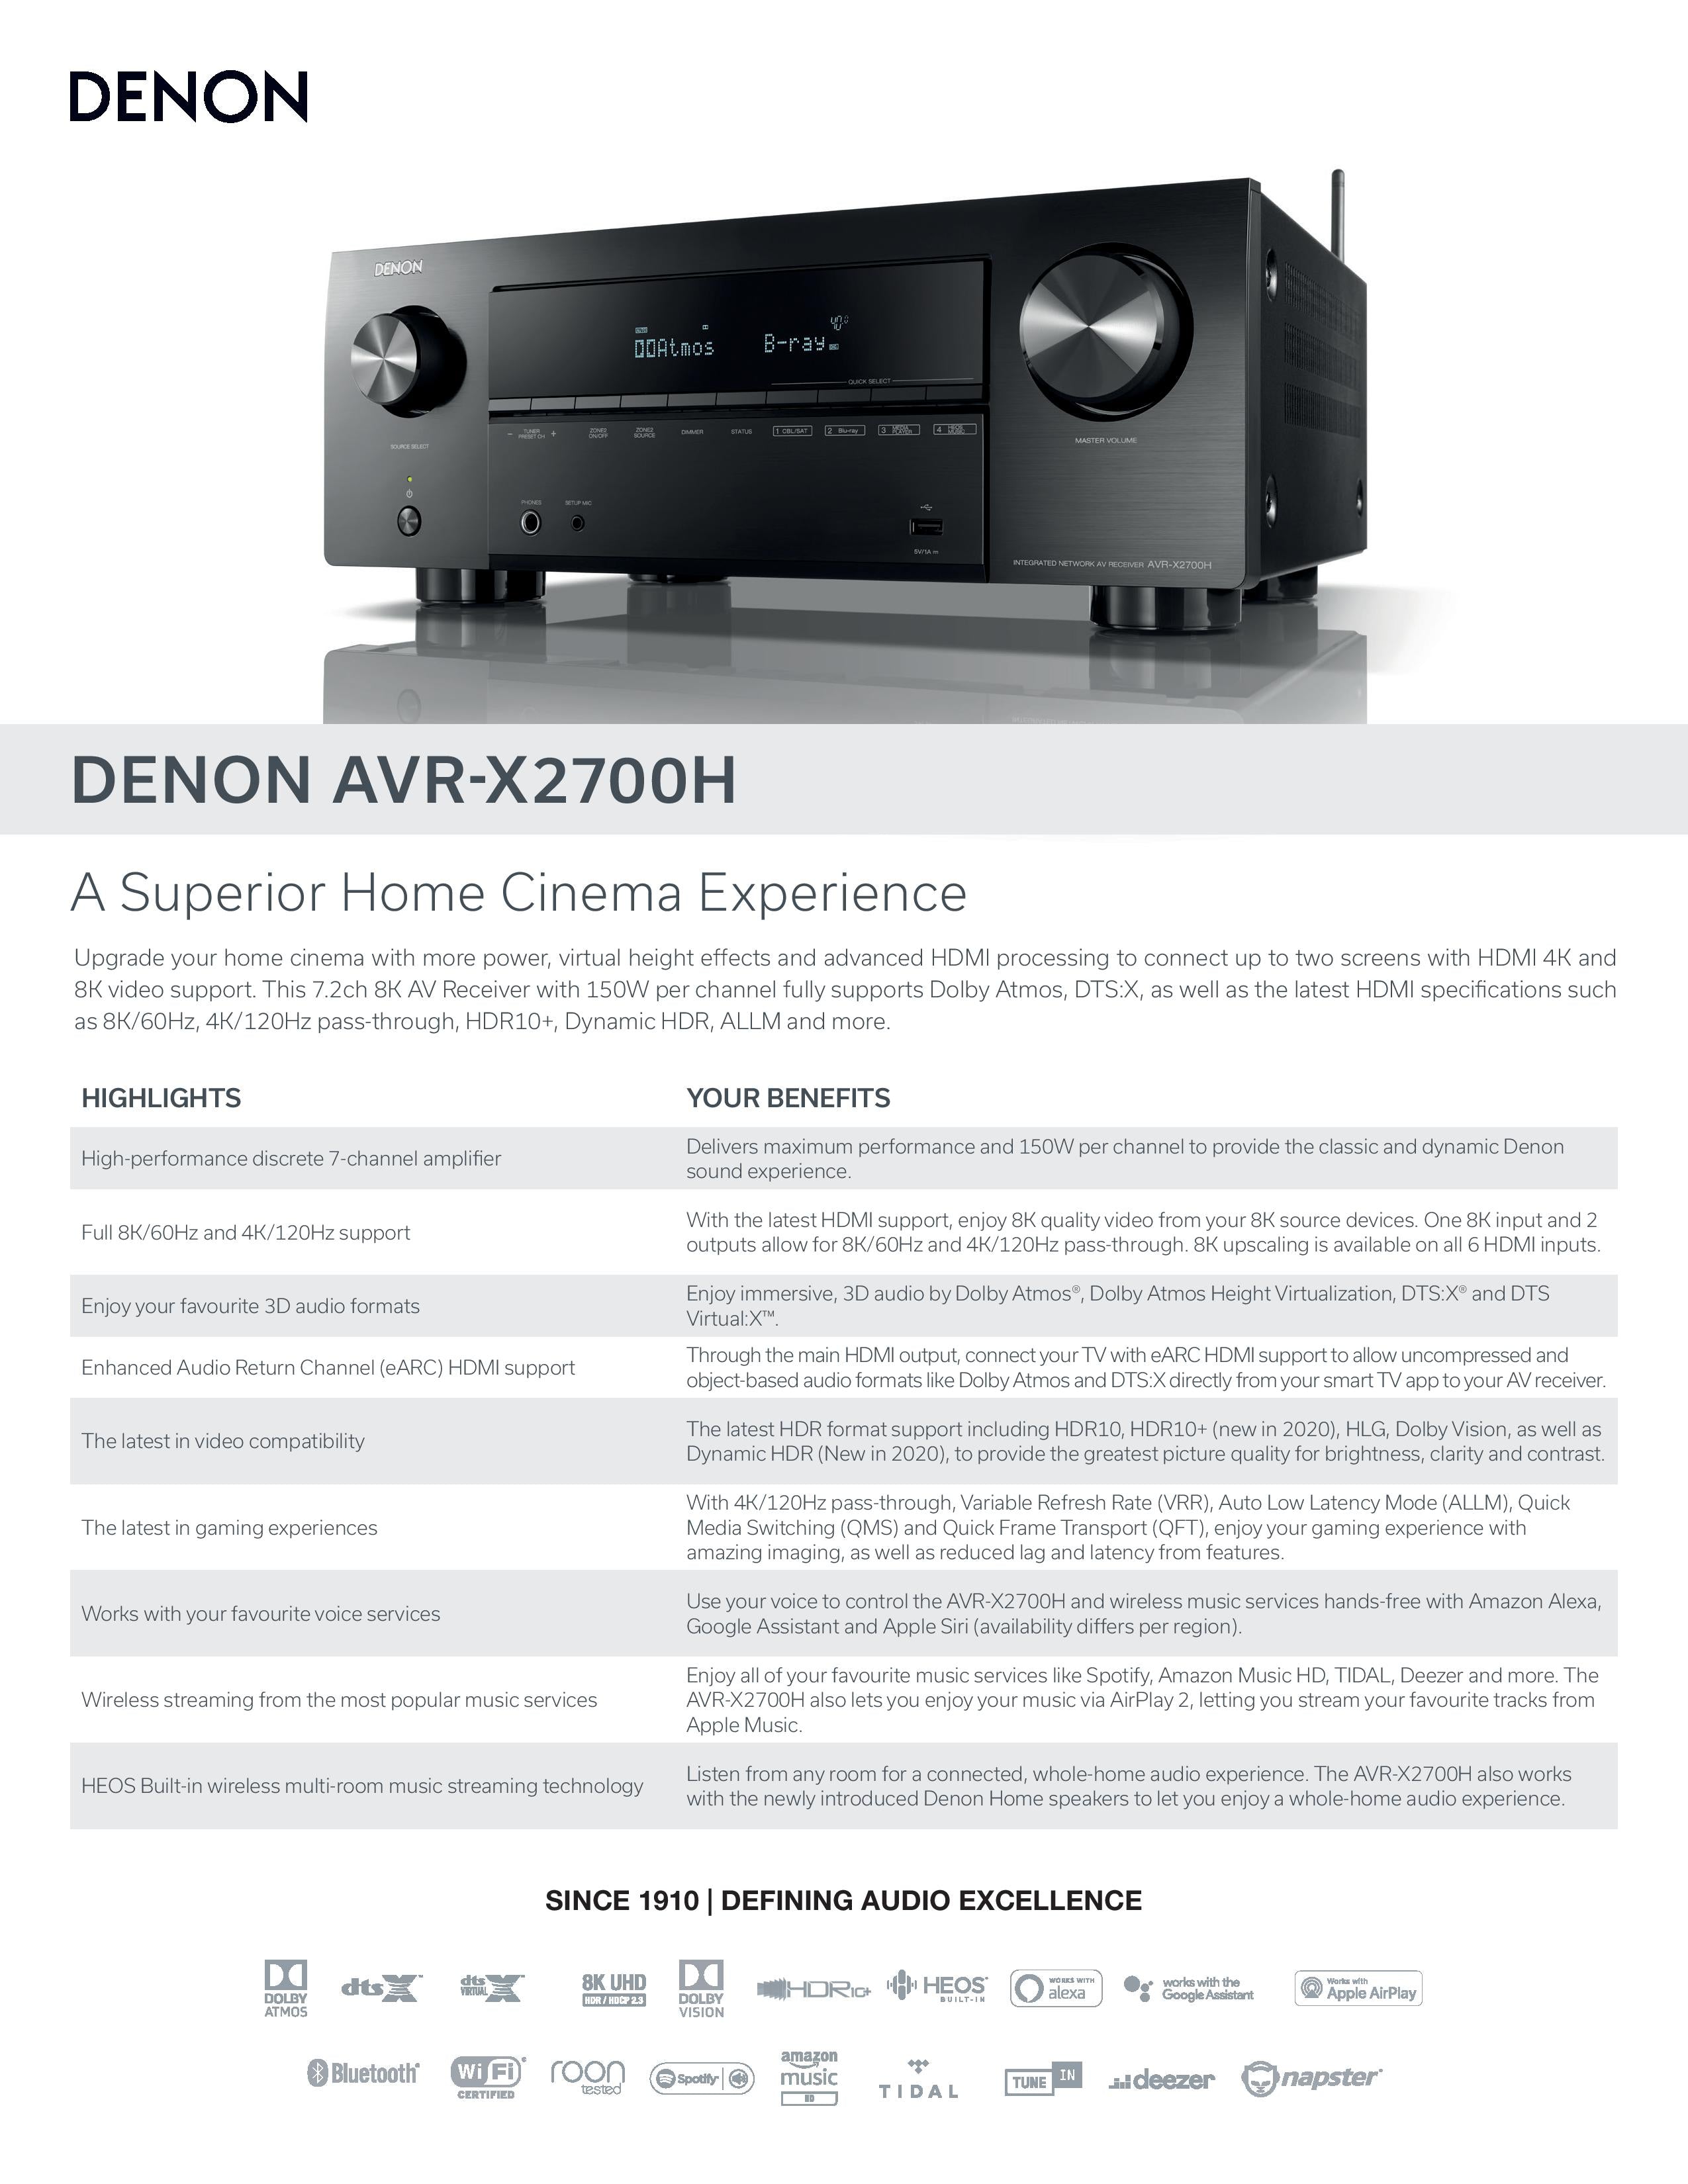 Denon AVR-X2700H